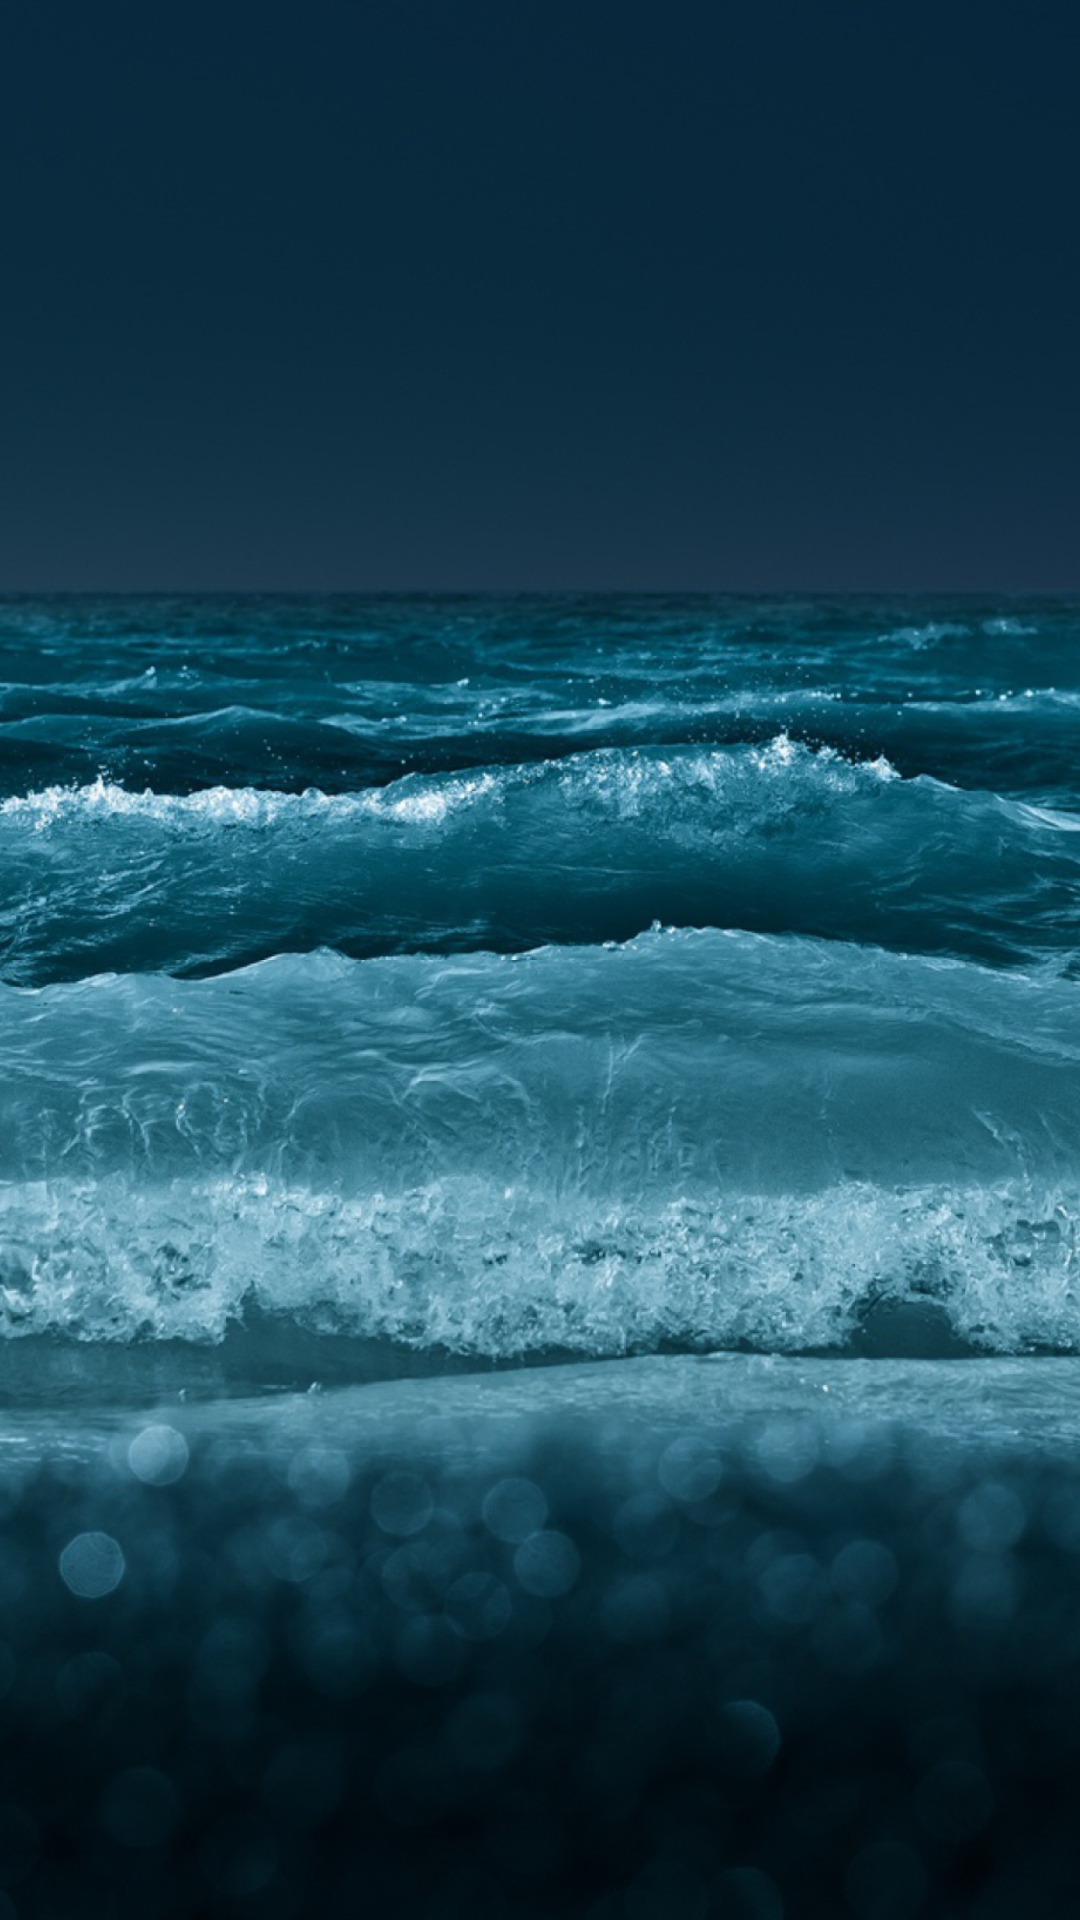 Big Blue Waves At Night wallpaper 1080x1920